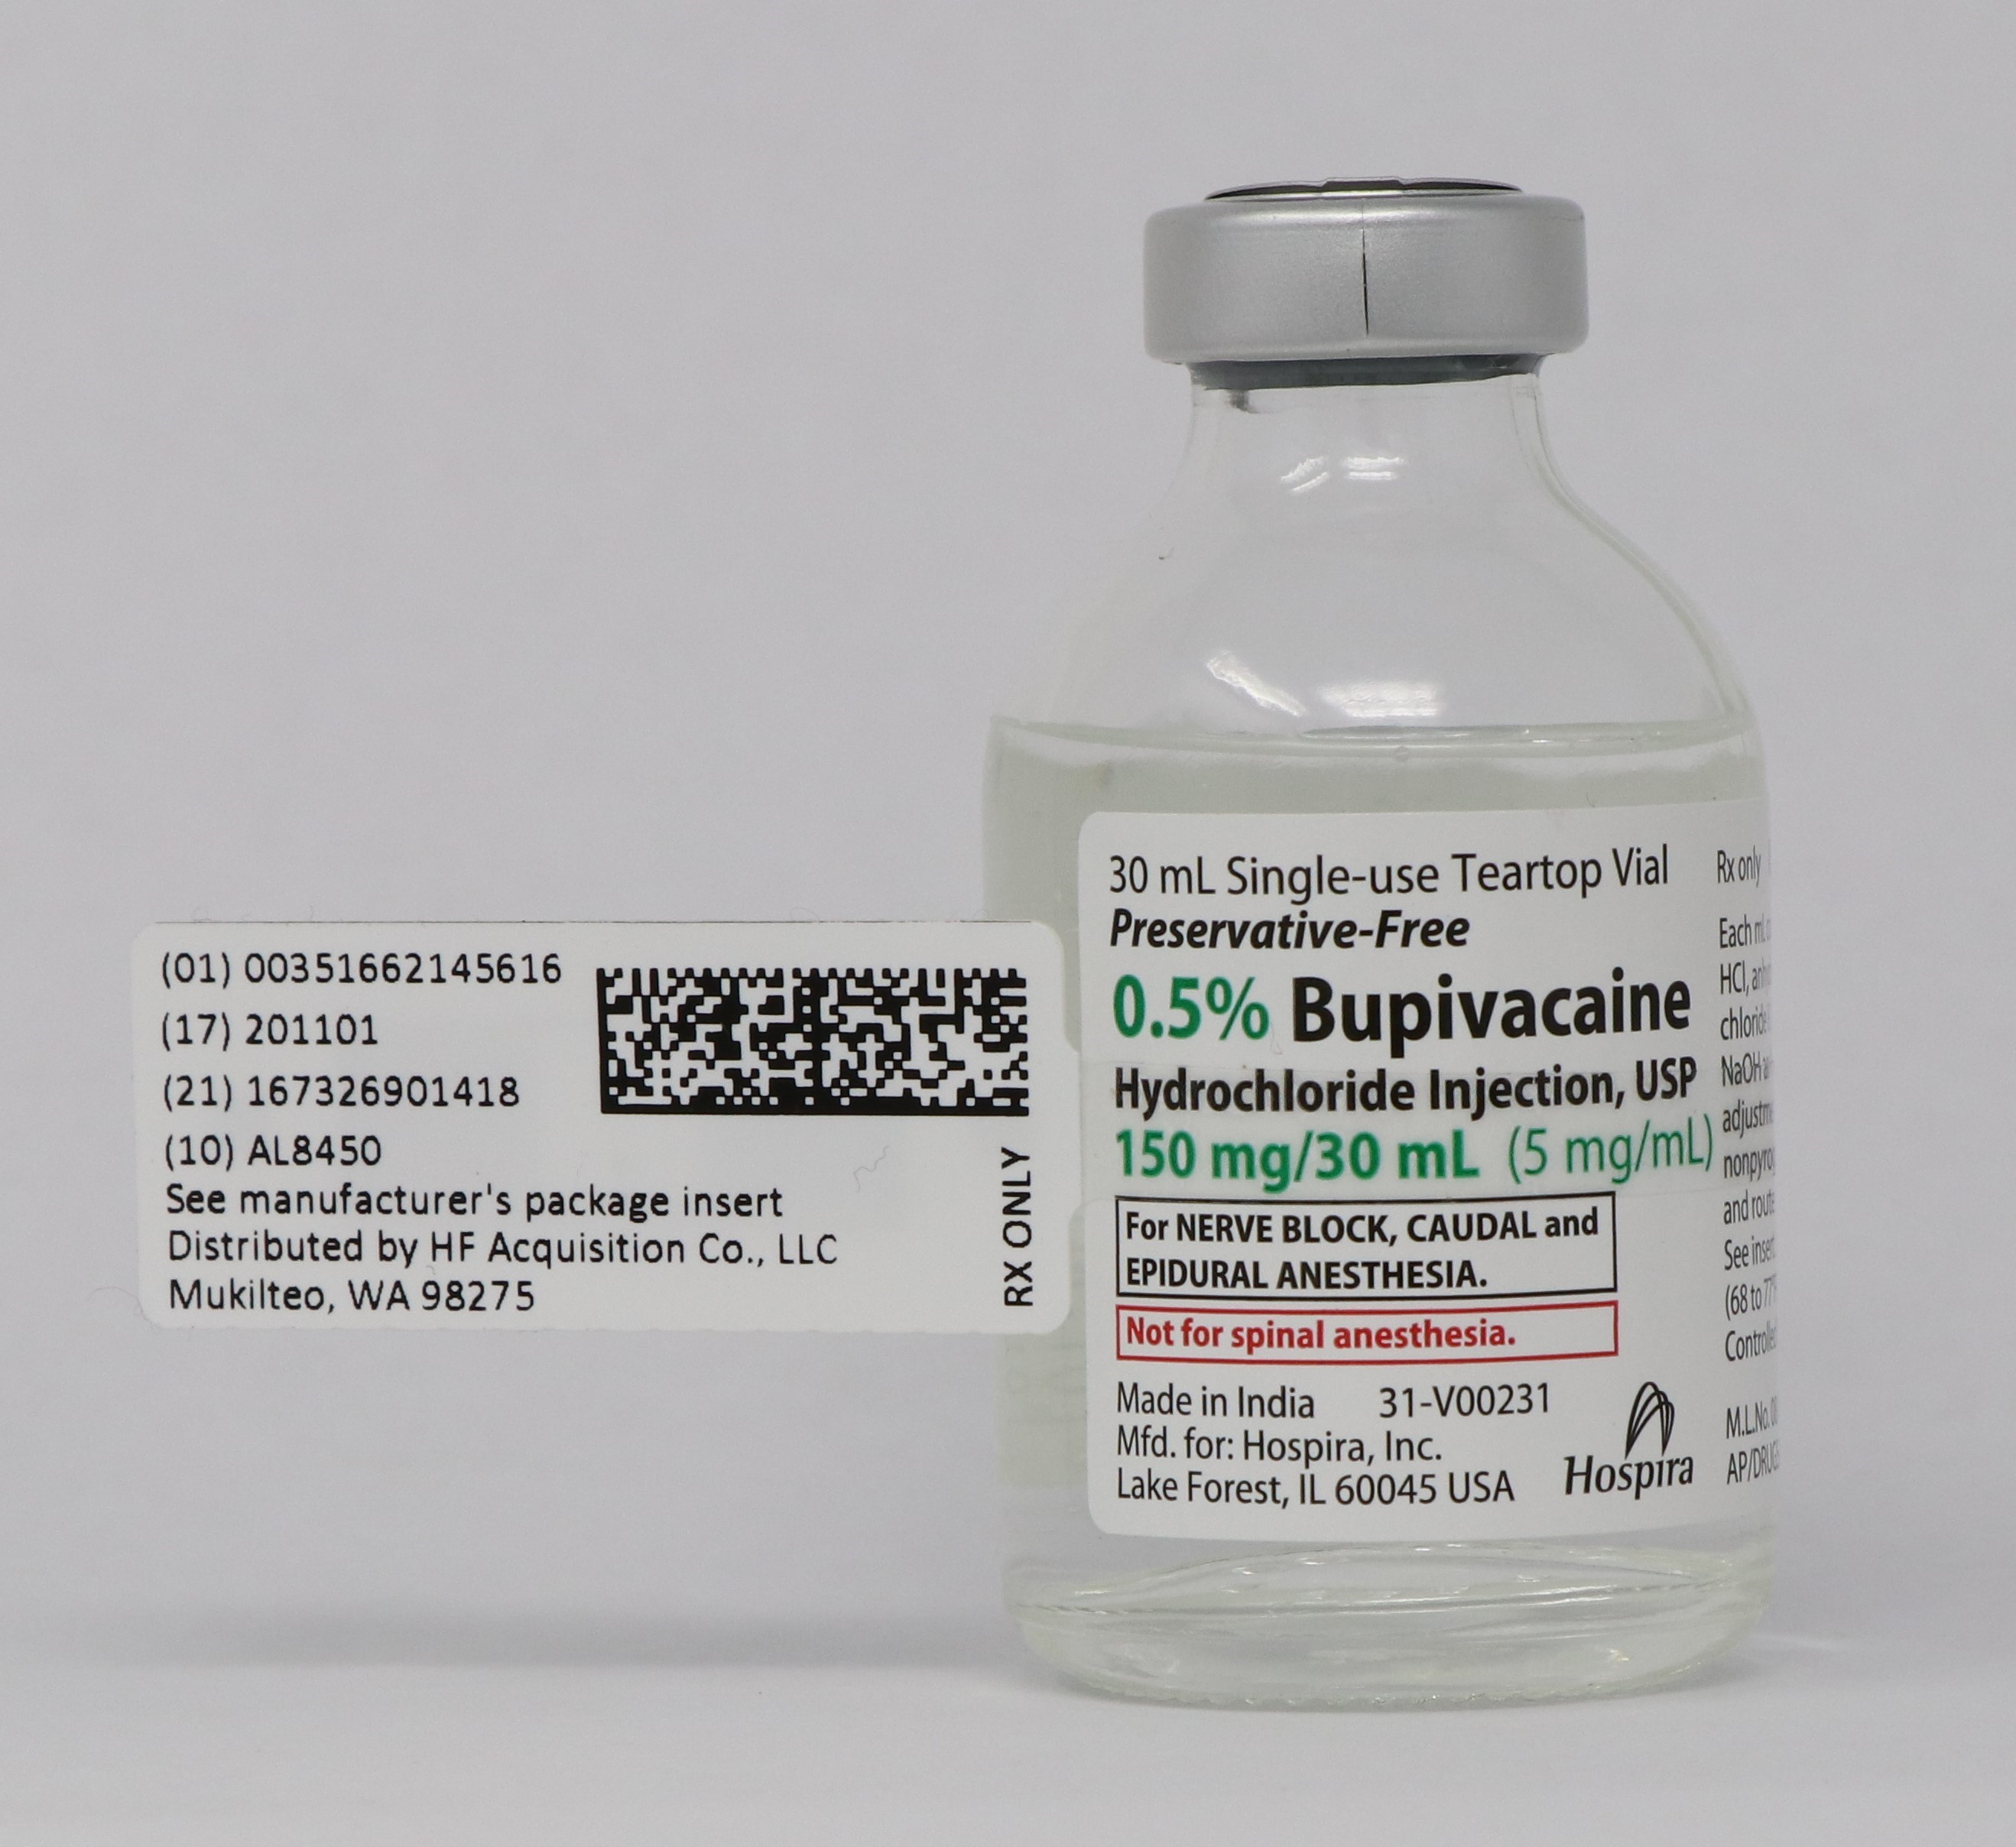 05 Bupivacaine Hydrochloride Injection Usp 150mg30ml 5mgml 30ml Vial 